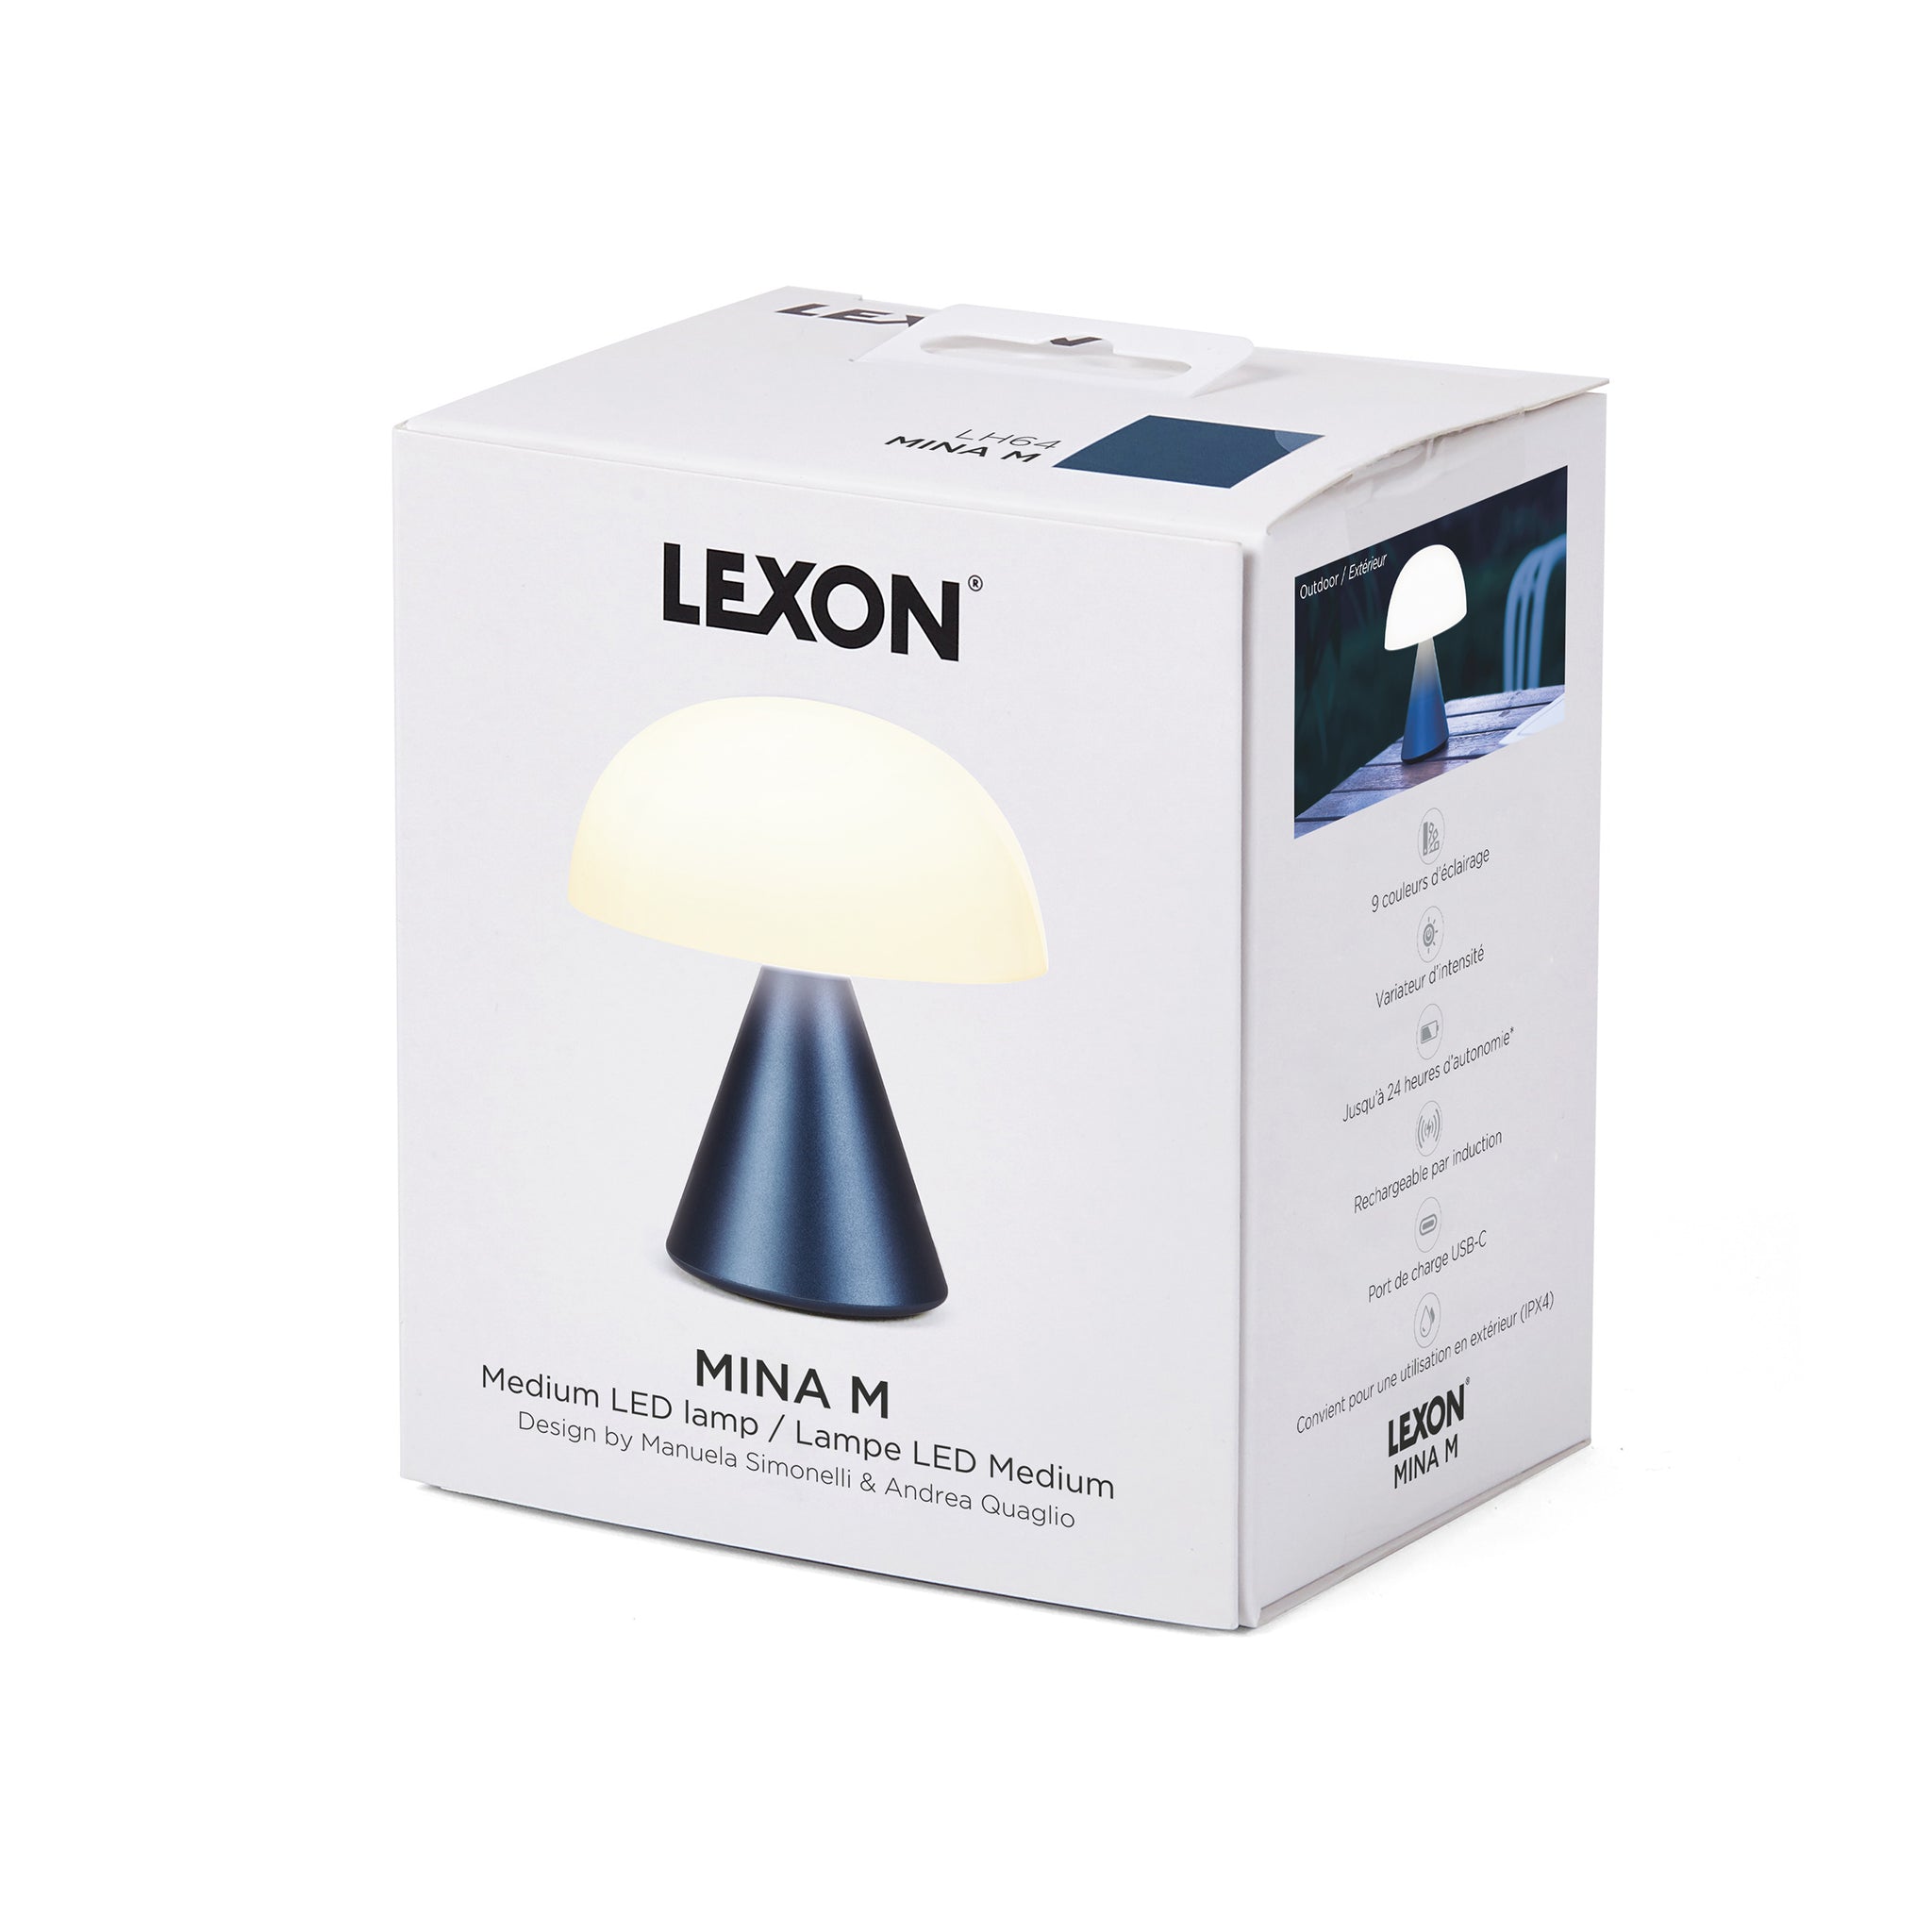 Lexon Mina Medium Donkerblauw│Oplaadbare LED-lamp│art. LH64MDB│verpakking dicht